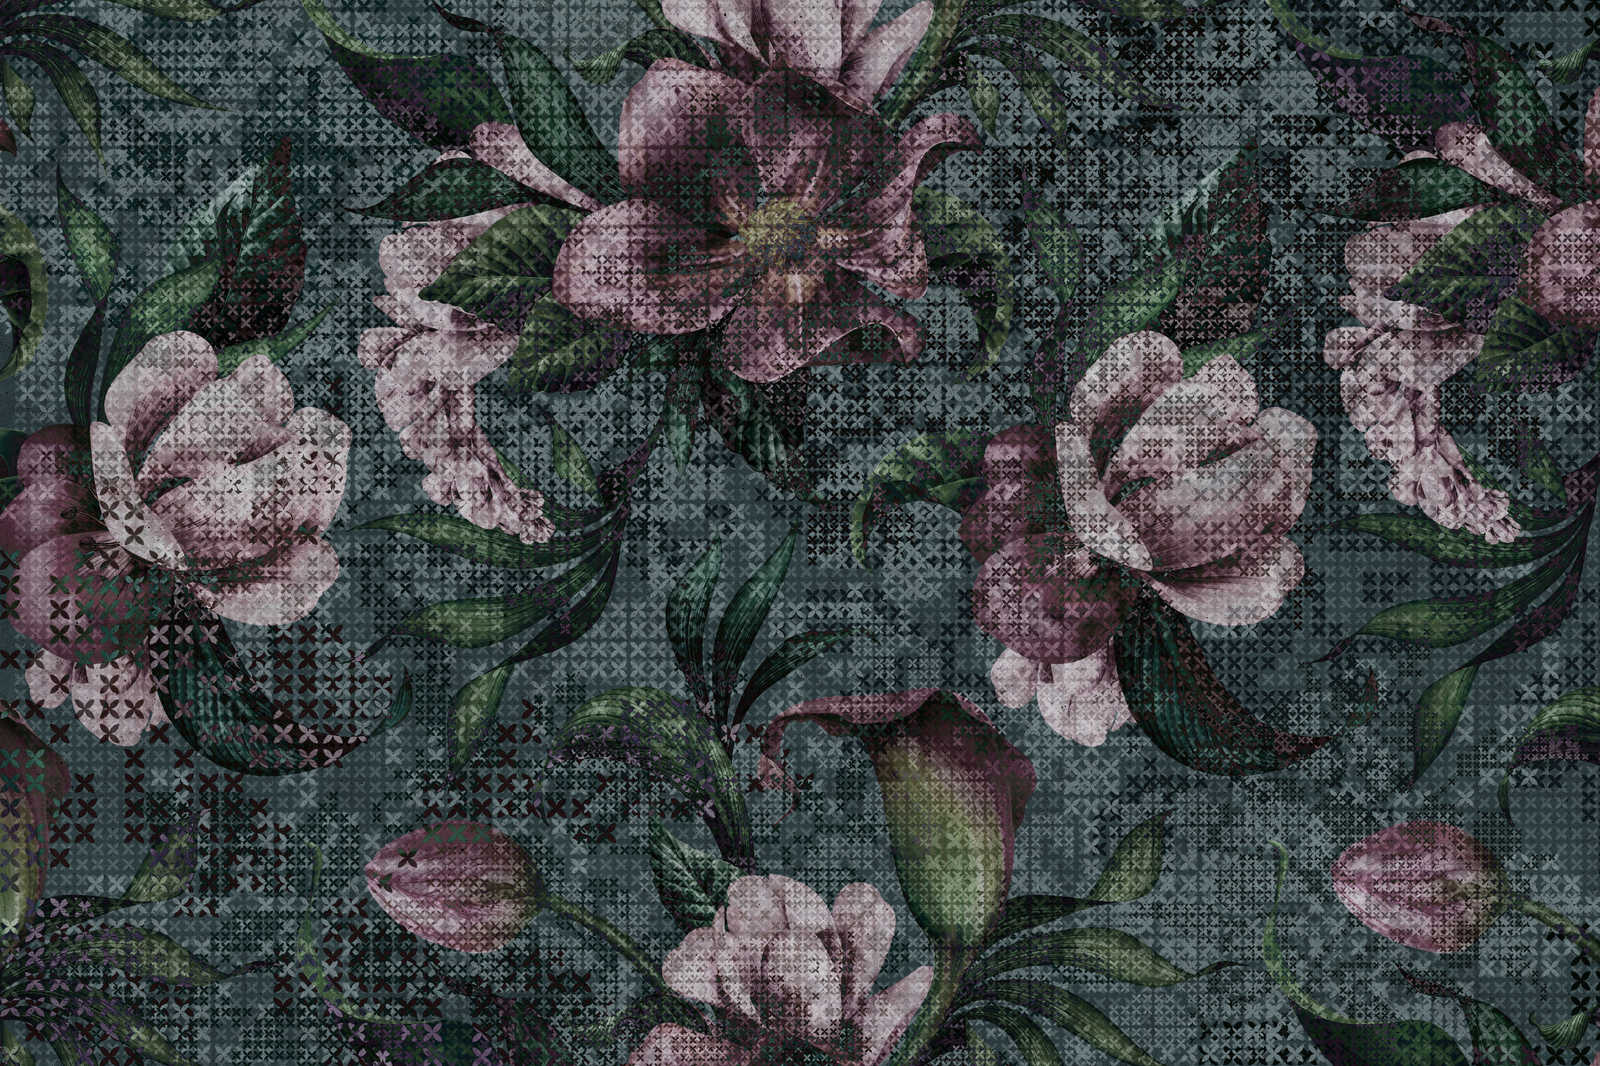             Fleurs toile Pixel Style - 1,20 m x 0,80 m
        